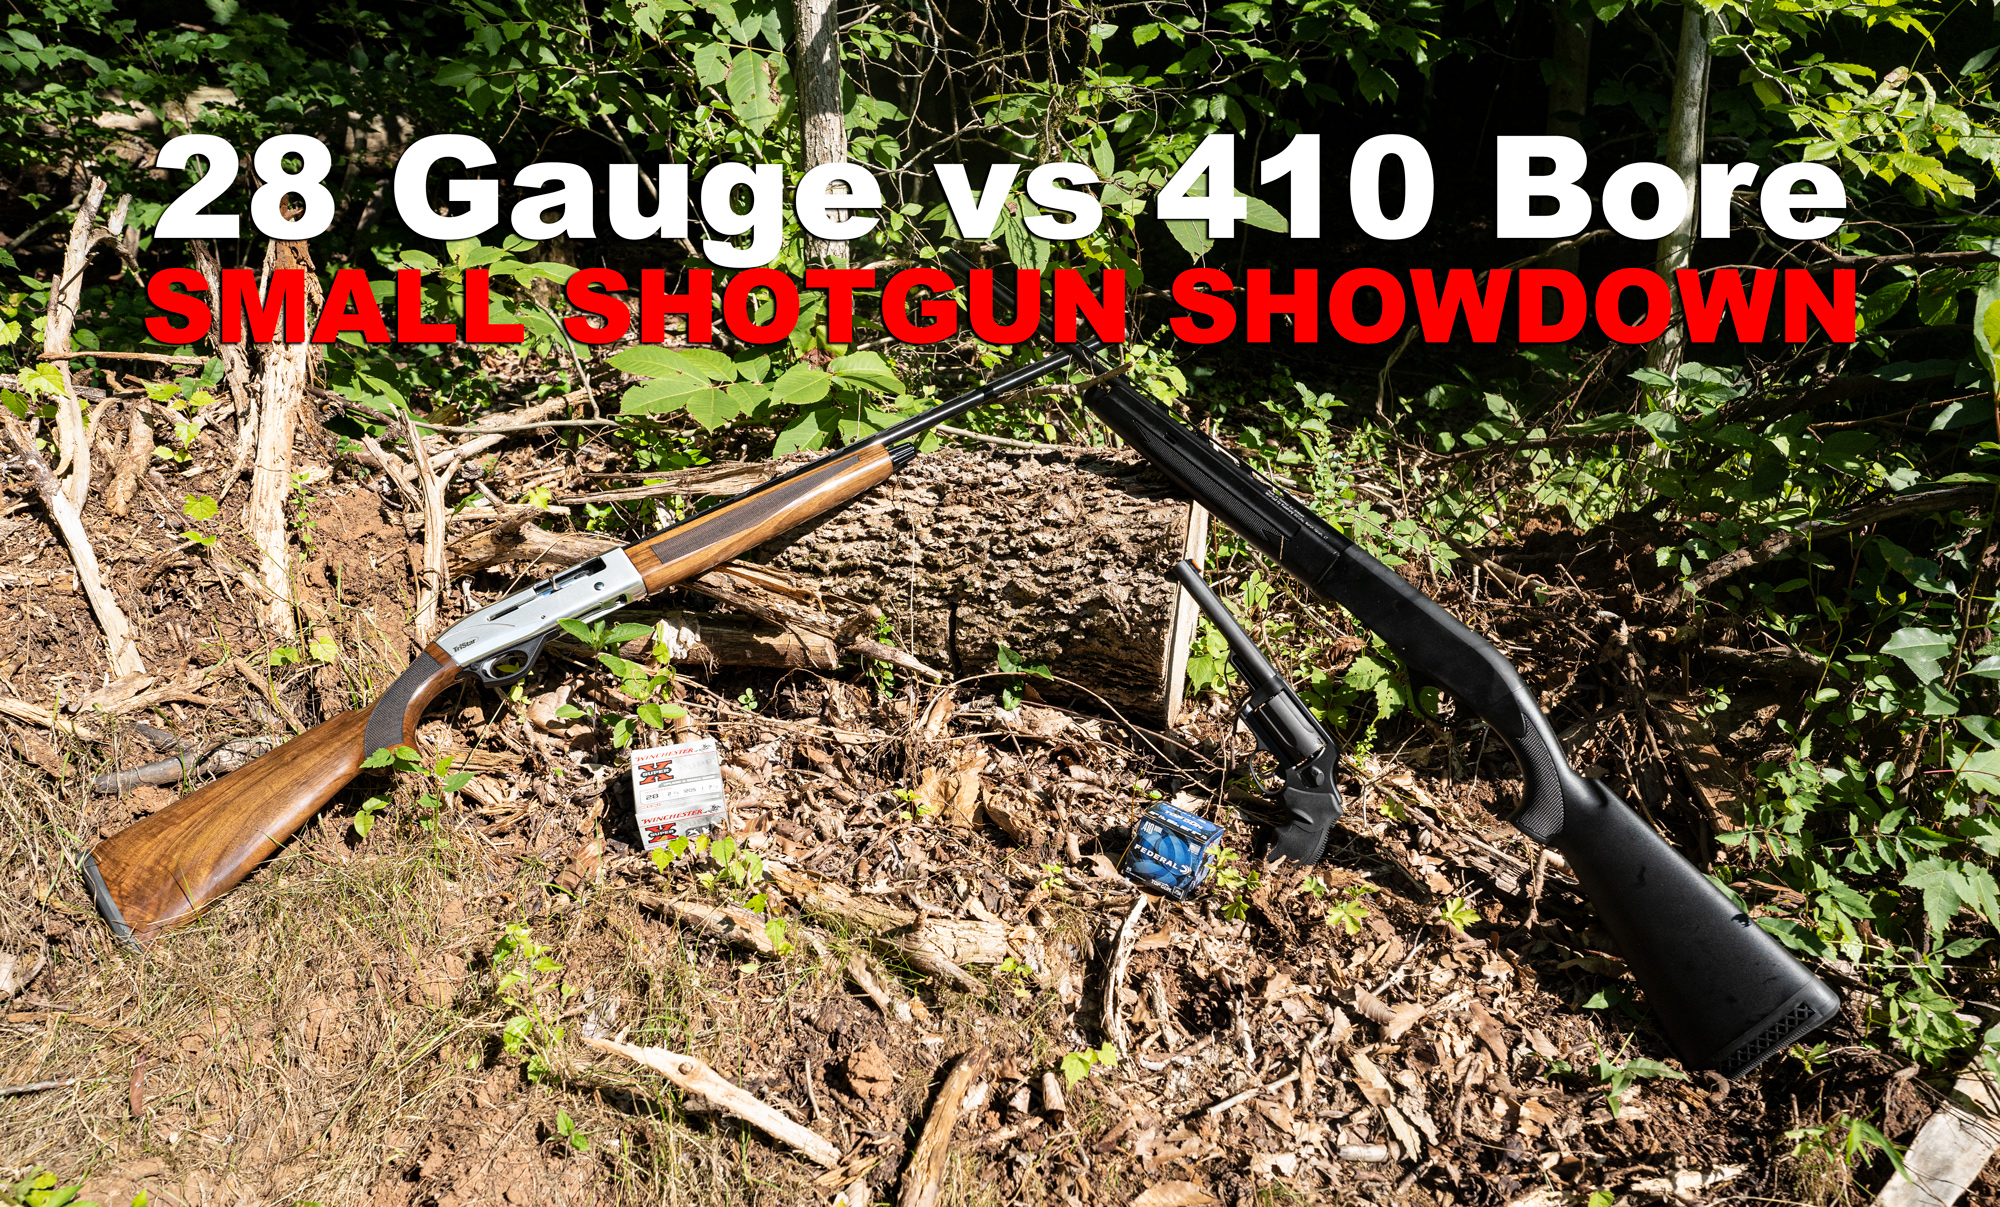 28 Gauge vs 410 Bore shotguns at the range